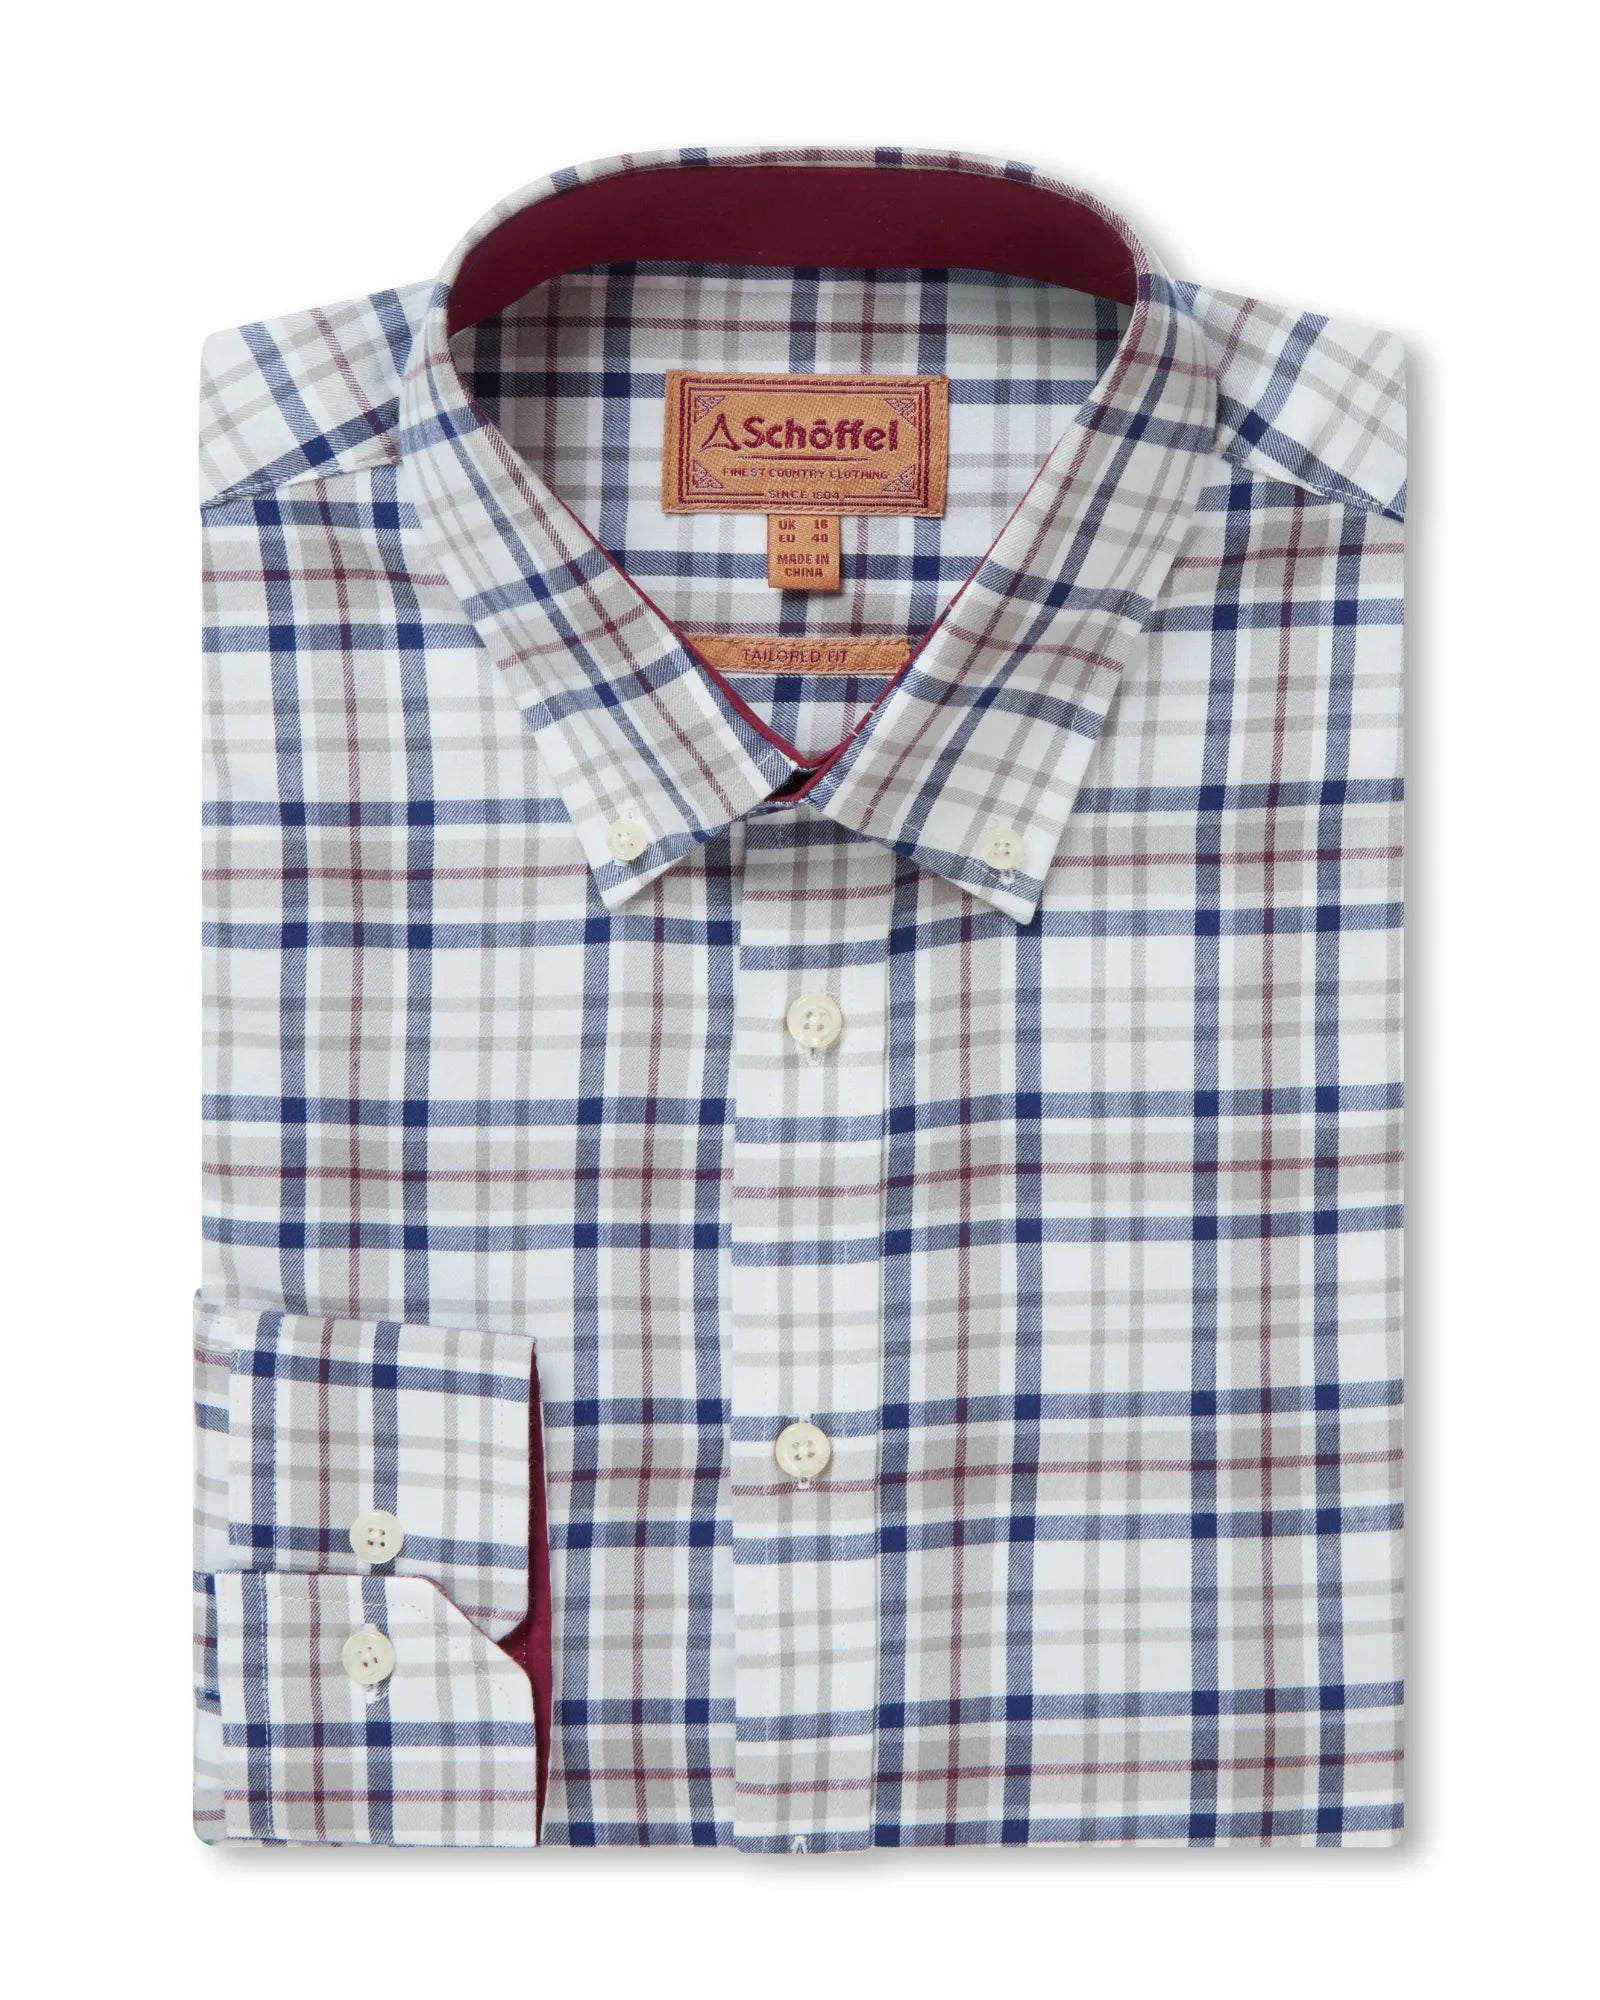 Healey Tailored Shirt - Damson/Grey/Indigo Check